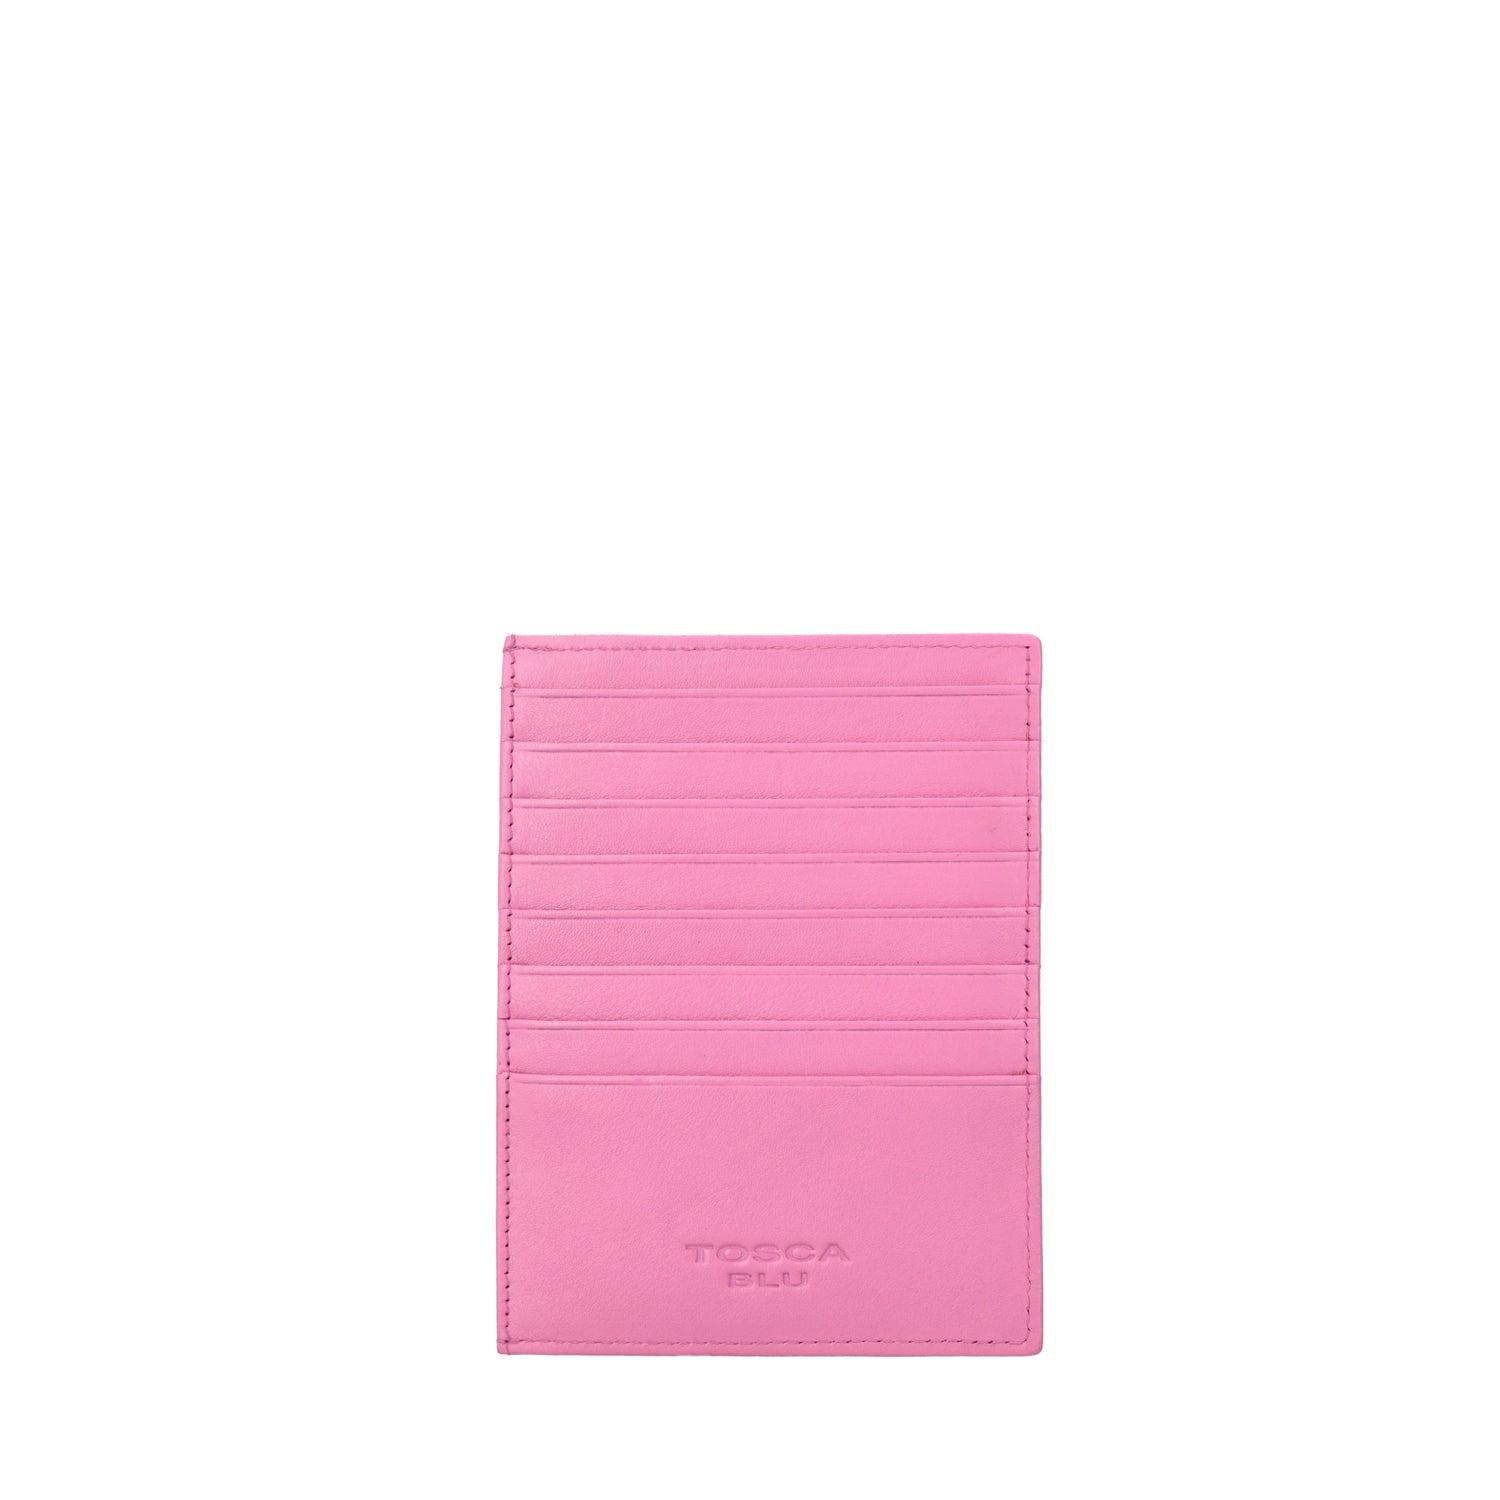 PINK BASIC WALLETS CARD HOLDER IN GENUINE LEATHER